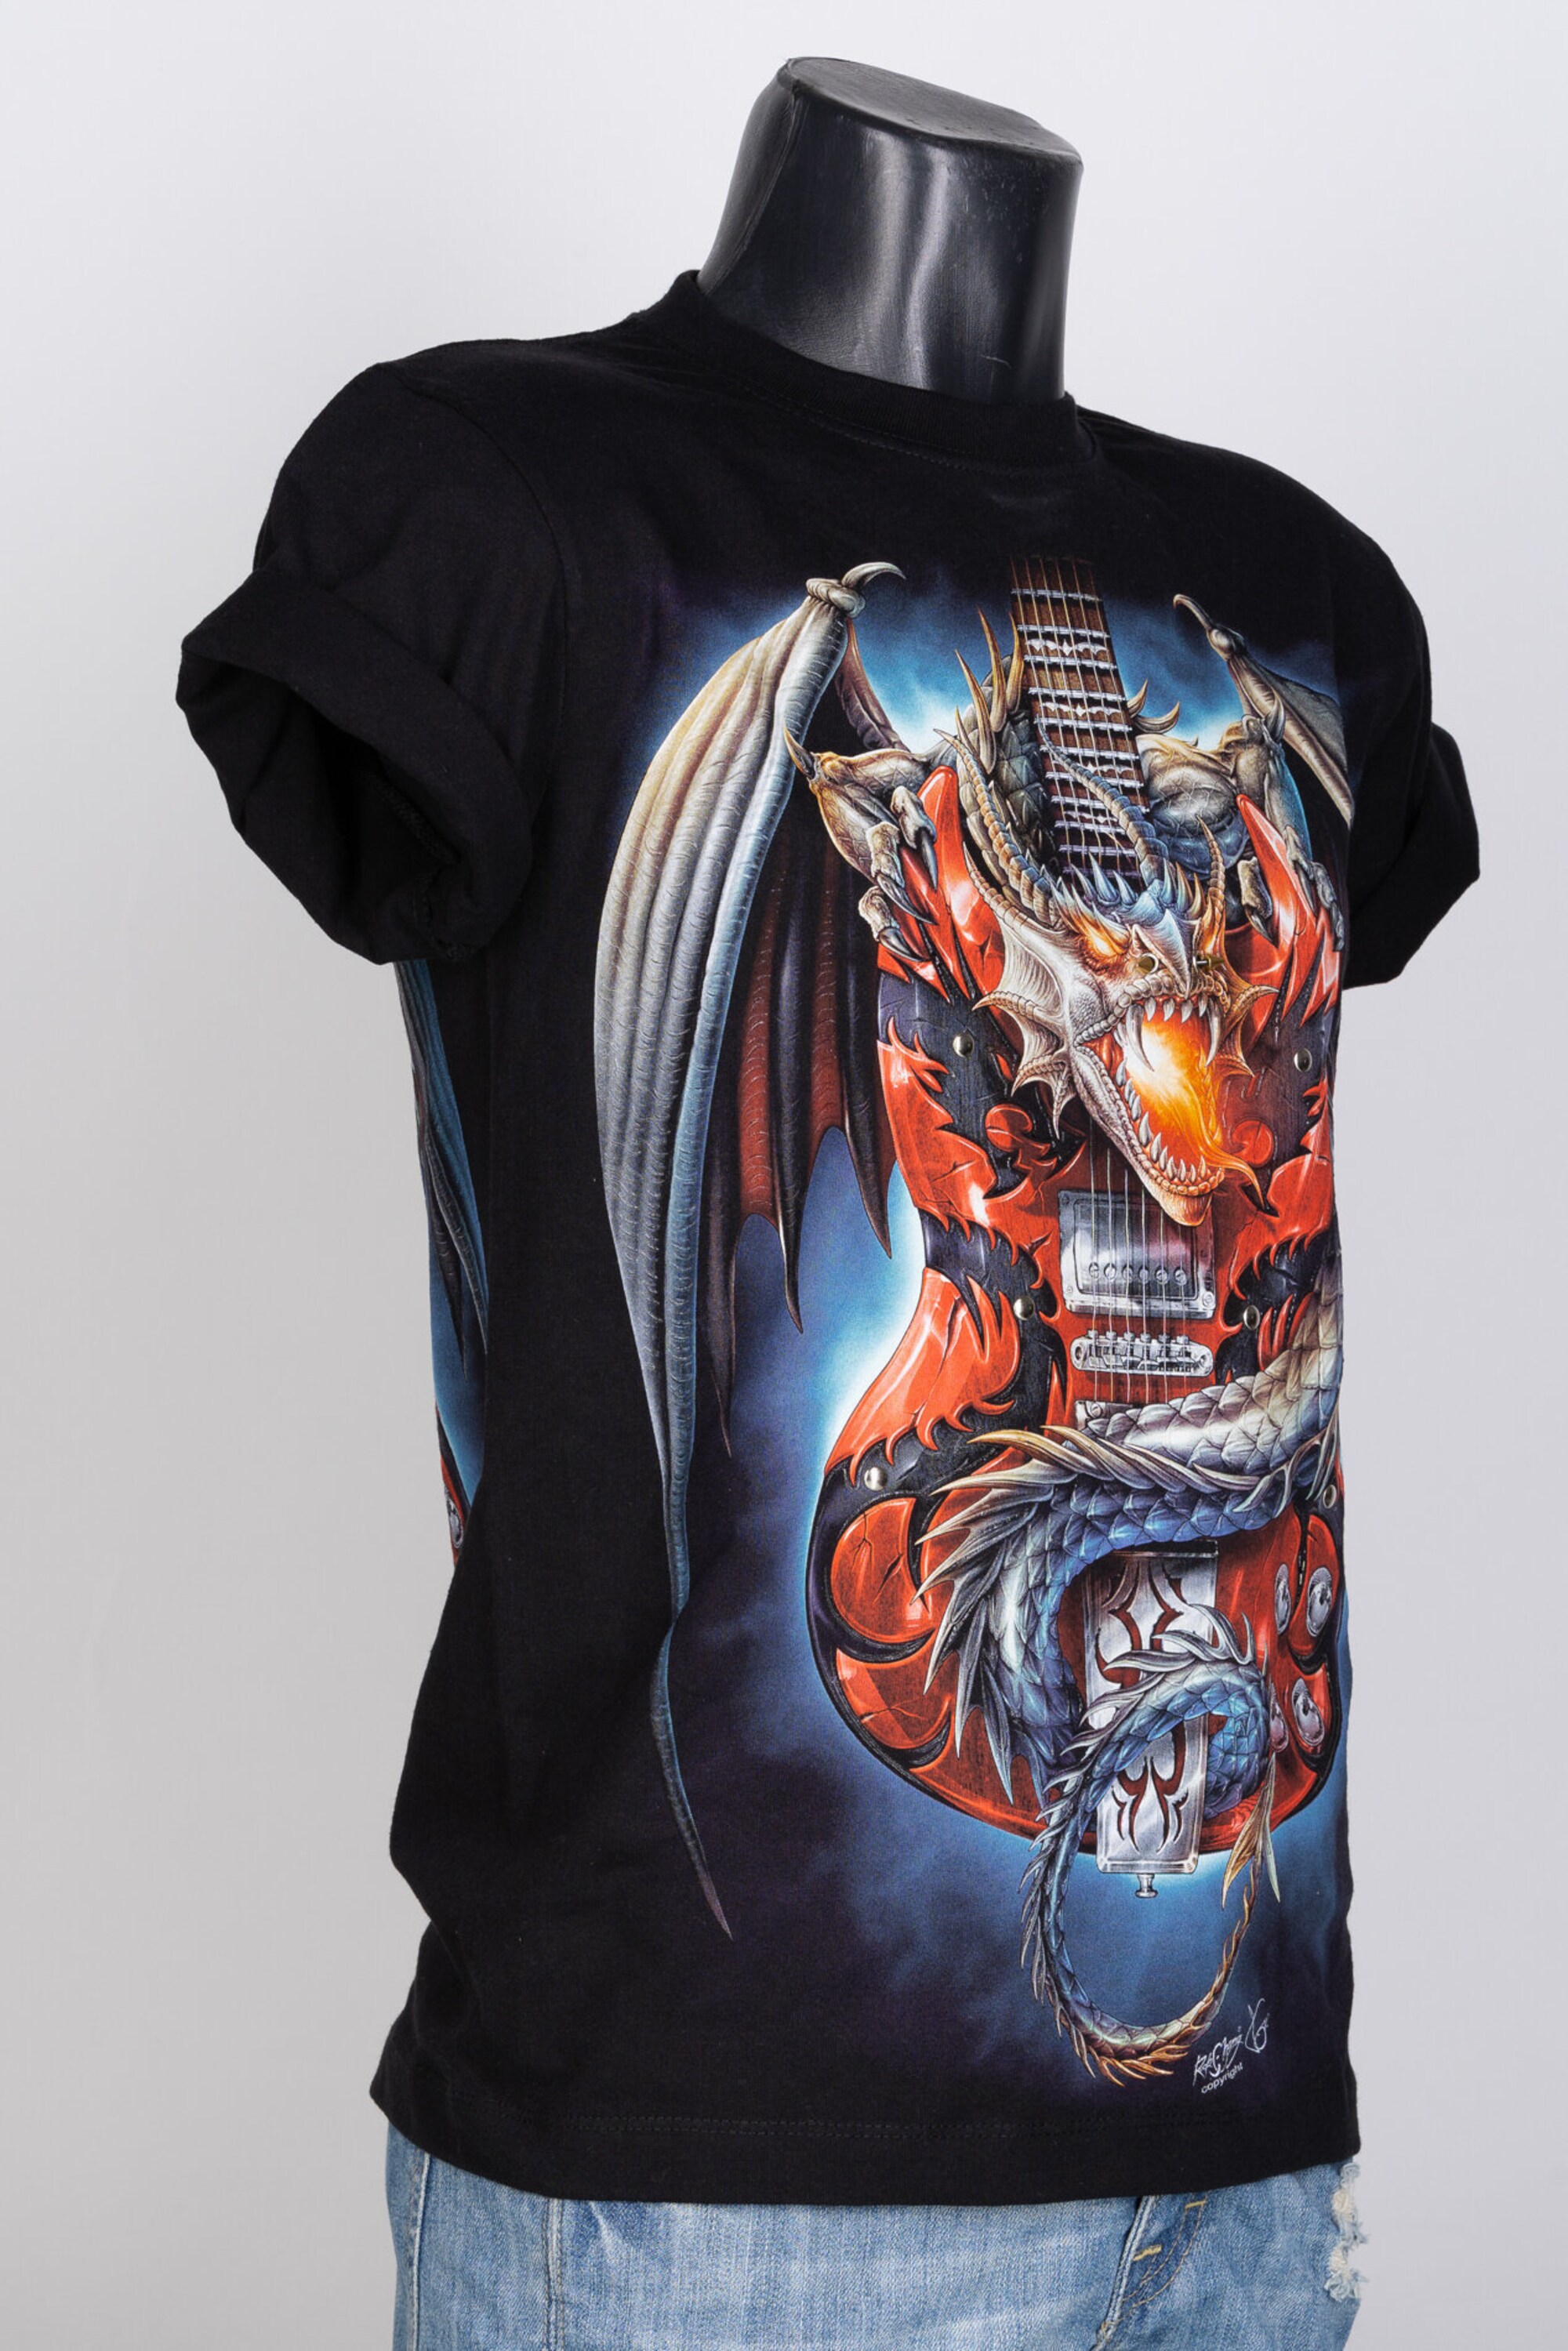 T-shirts 3D Rock Chang Original Dragon Fire Rock Guitar